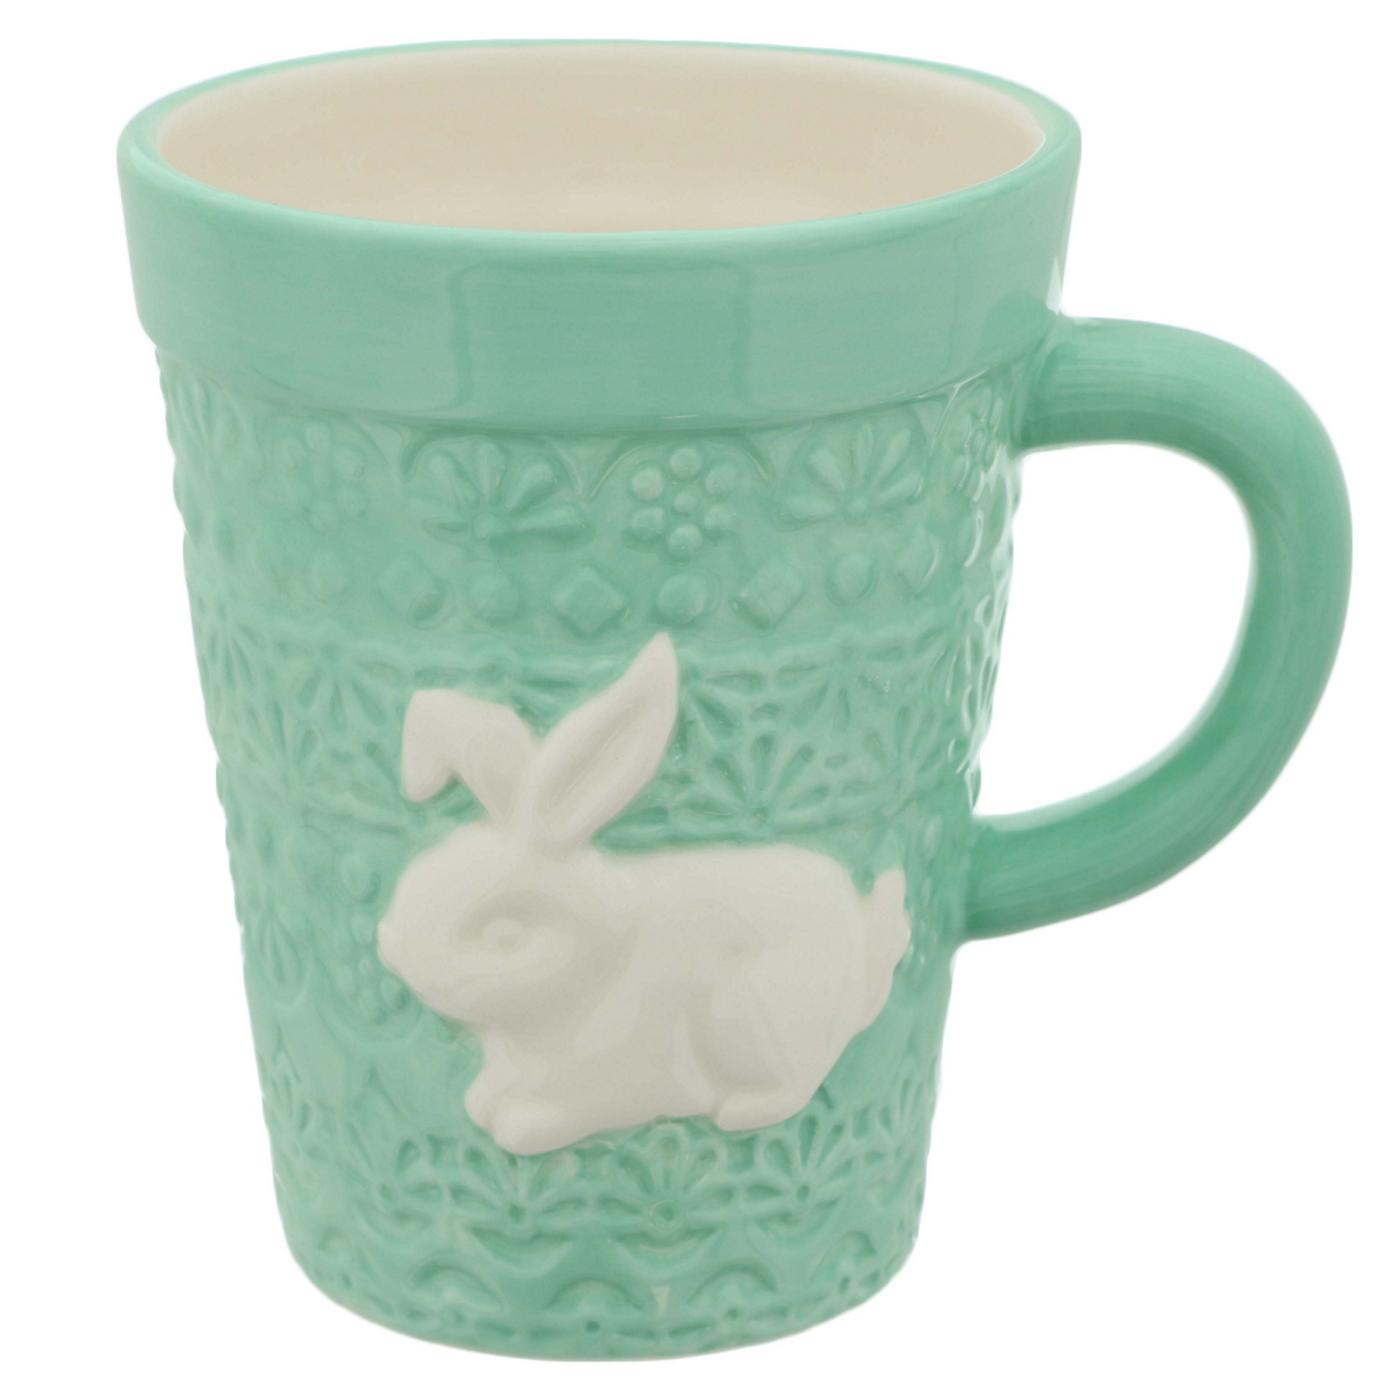 Haven & Key Ceramic Easter Mug Assorted Colors; image 2 of 2